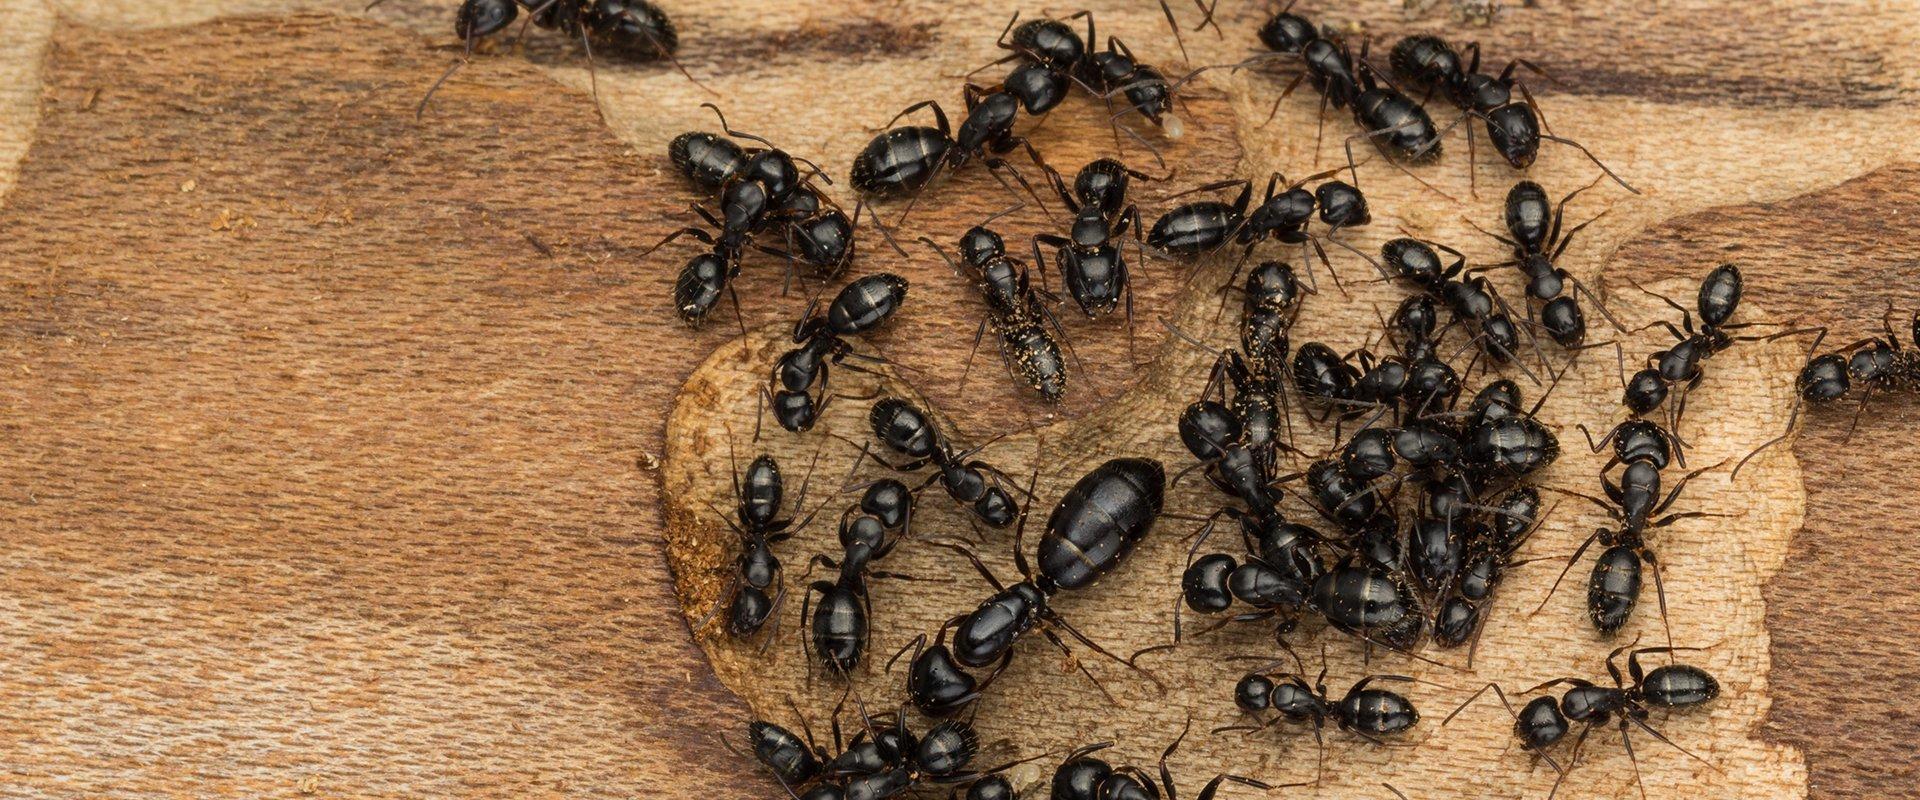 Ants Exterminator in Wilton